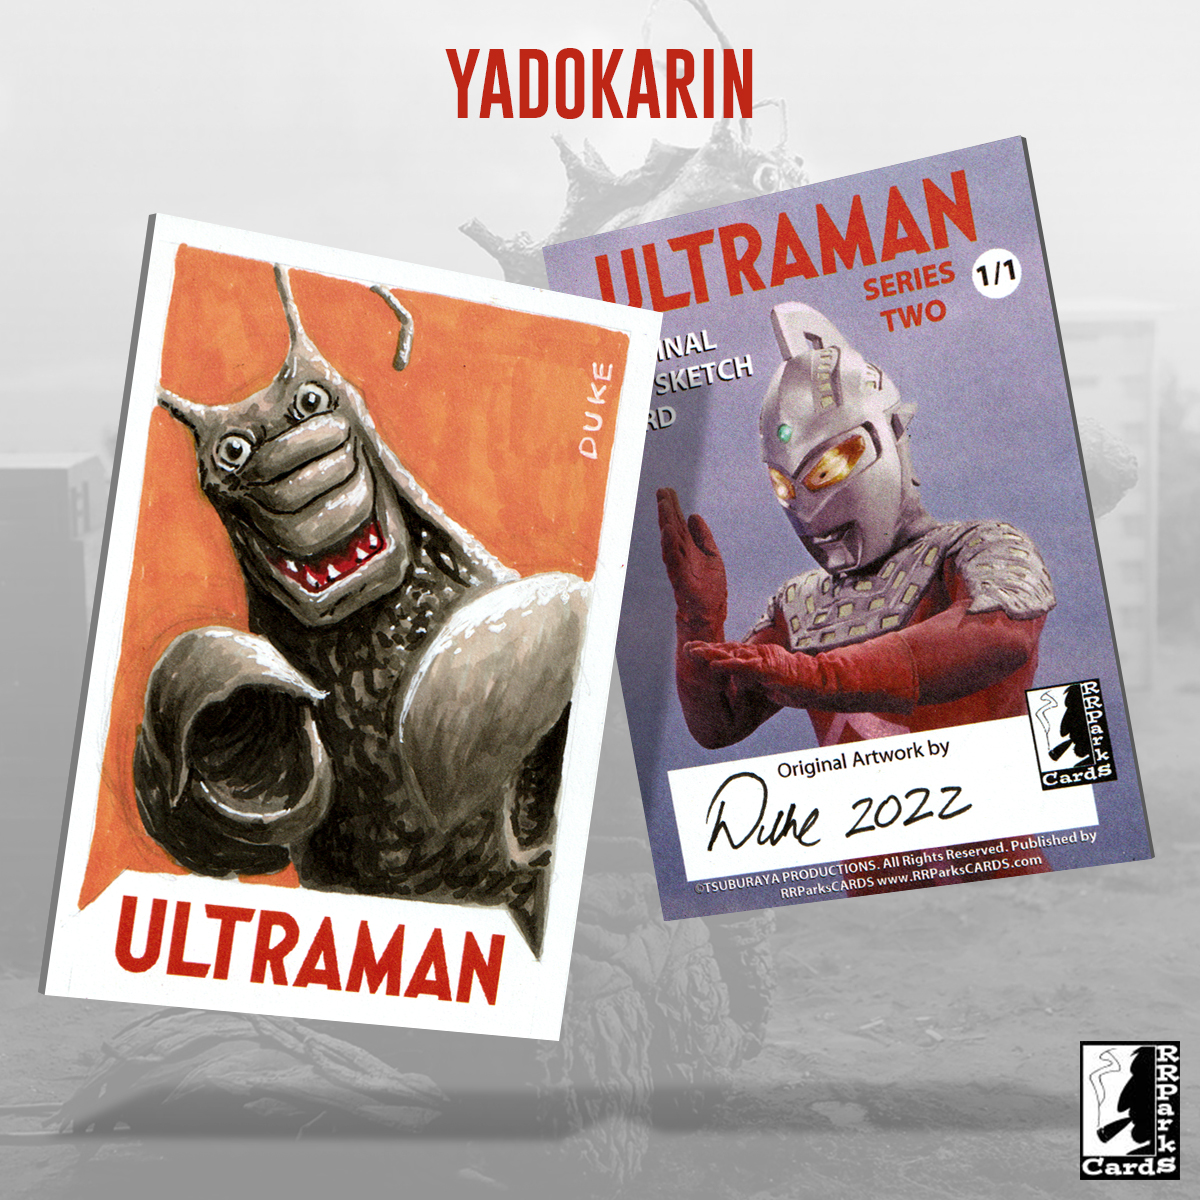 Ultraman Series 2 Yadokarin Sketch Card by Duke